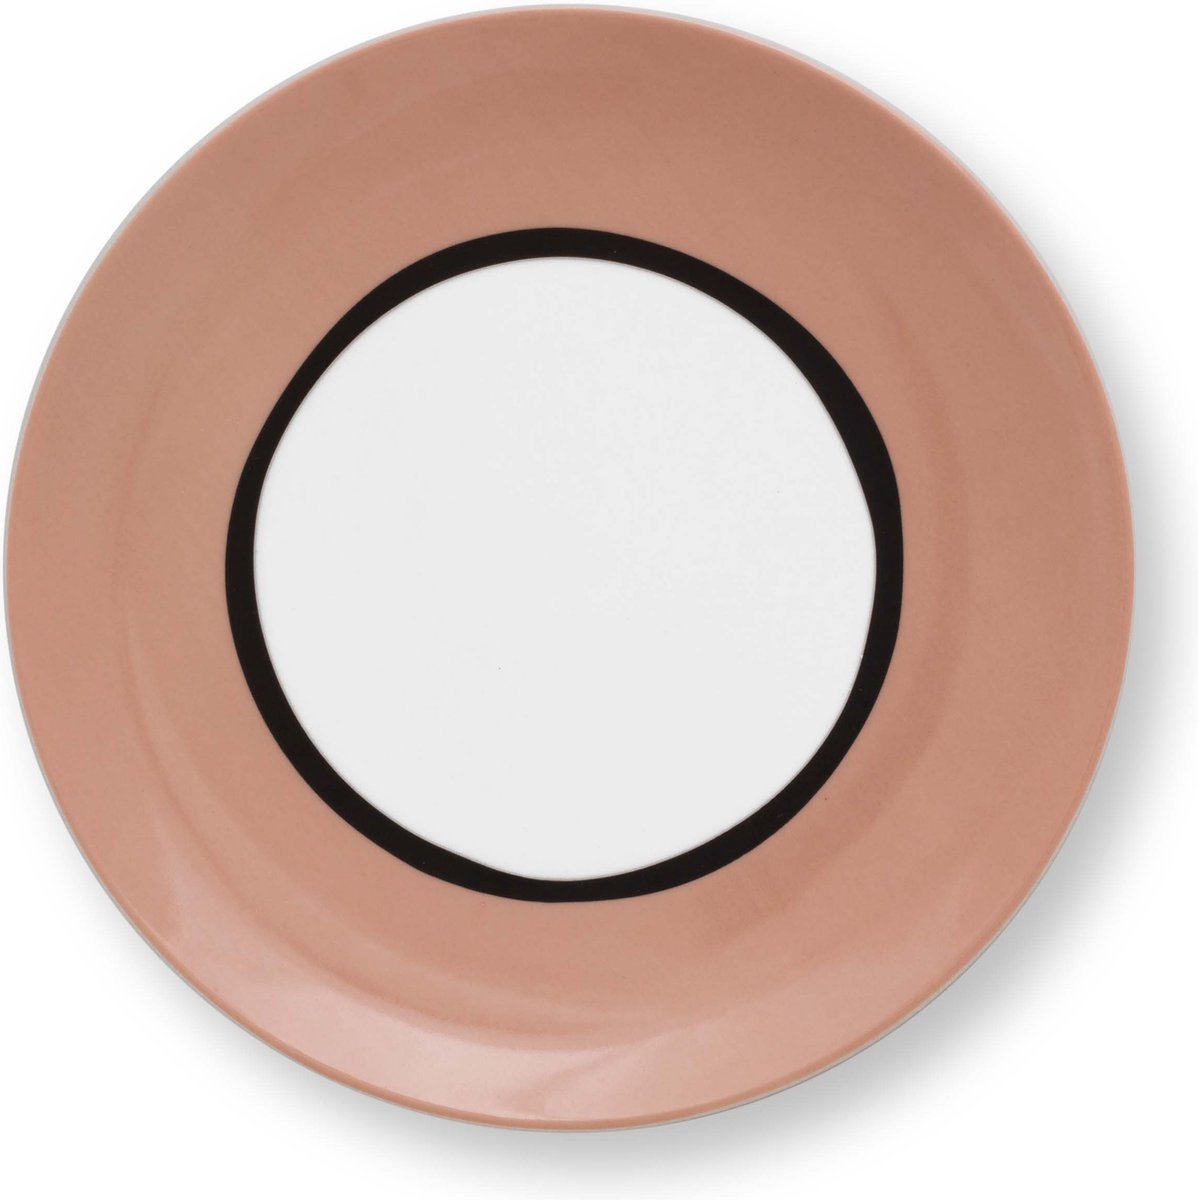 VT Wonen Circles soft Clay Pink - gebaksbord - ⌀ 18cm - porselein - roze servies - vt wonen servies - gebaksbordjes met cirkels